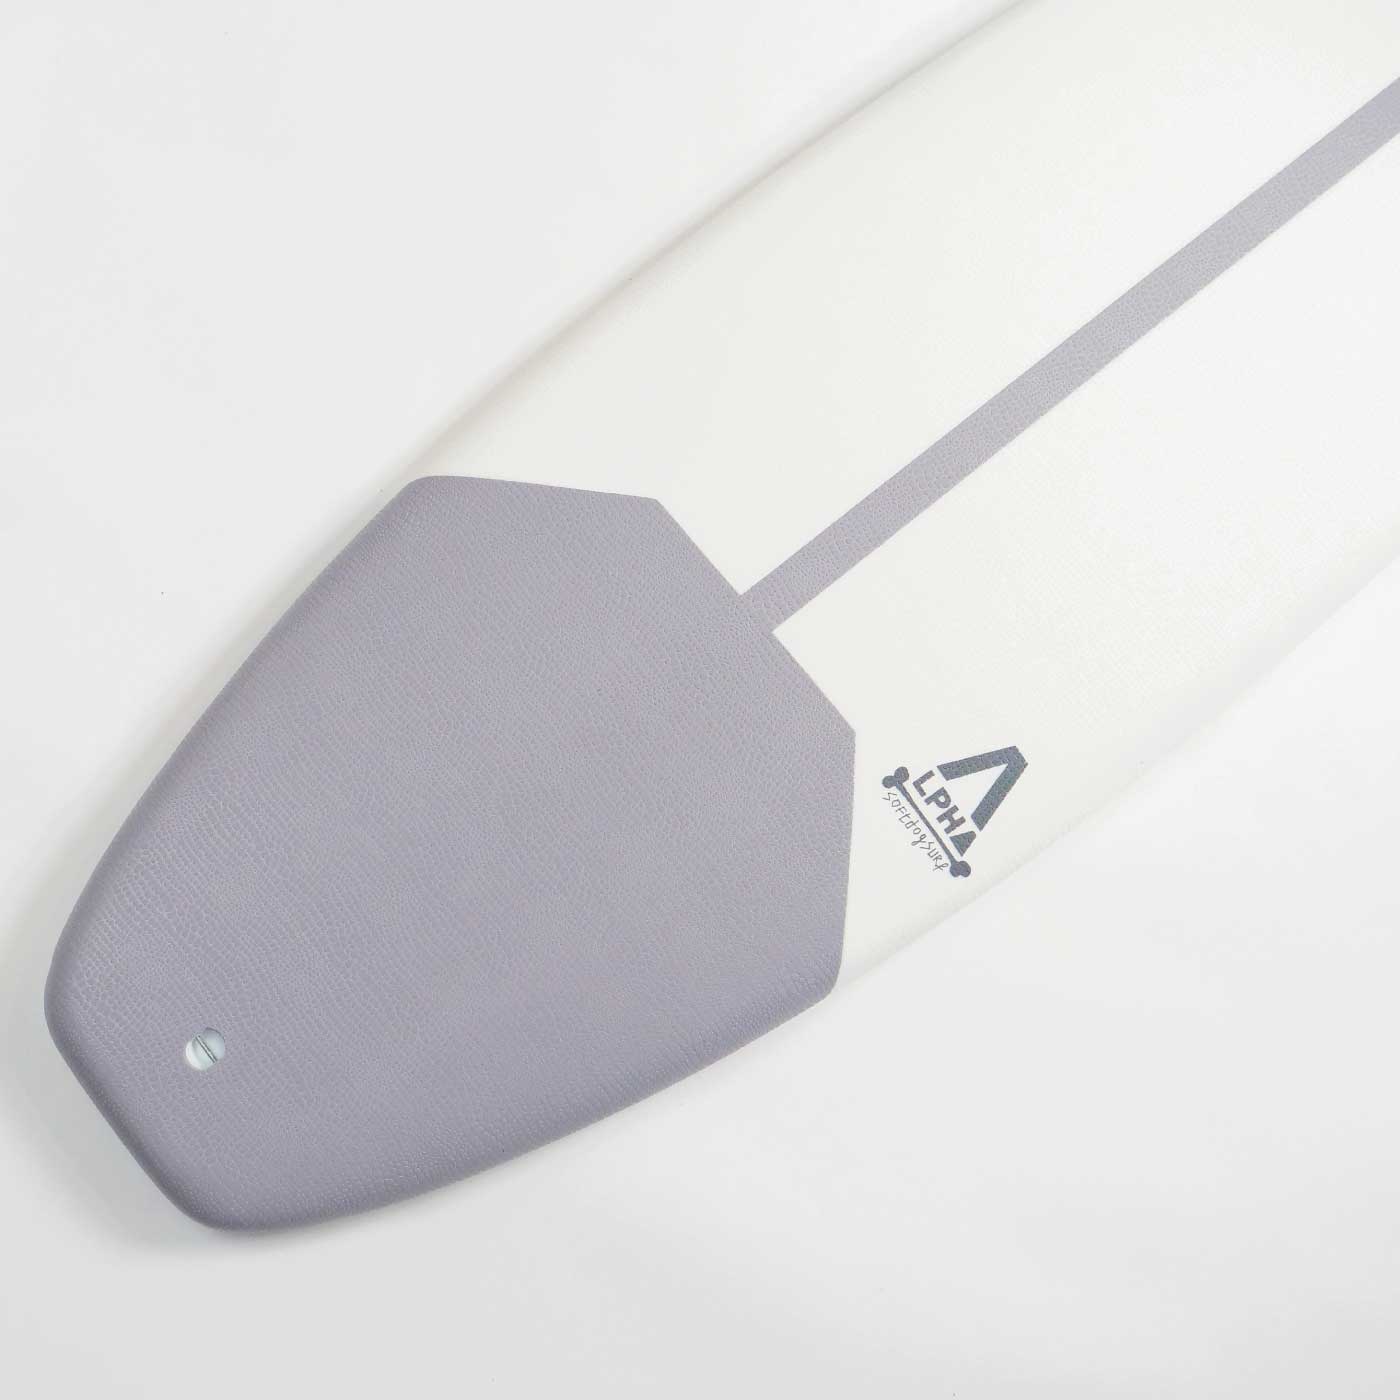 5’8 soft top high-performance surfboard tail grip design